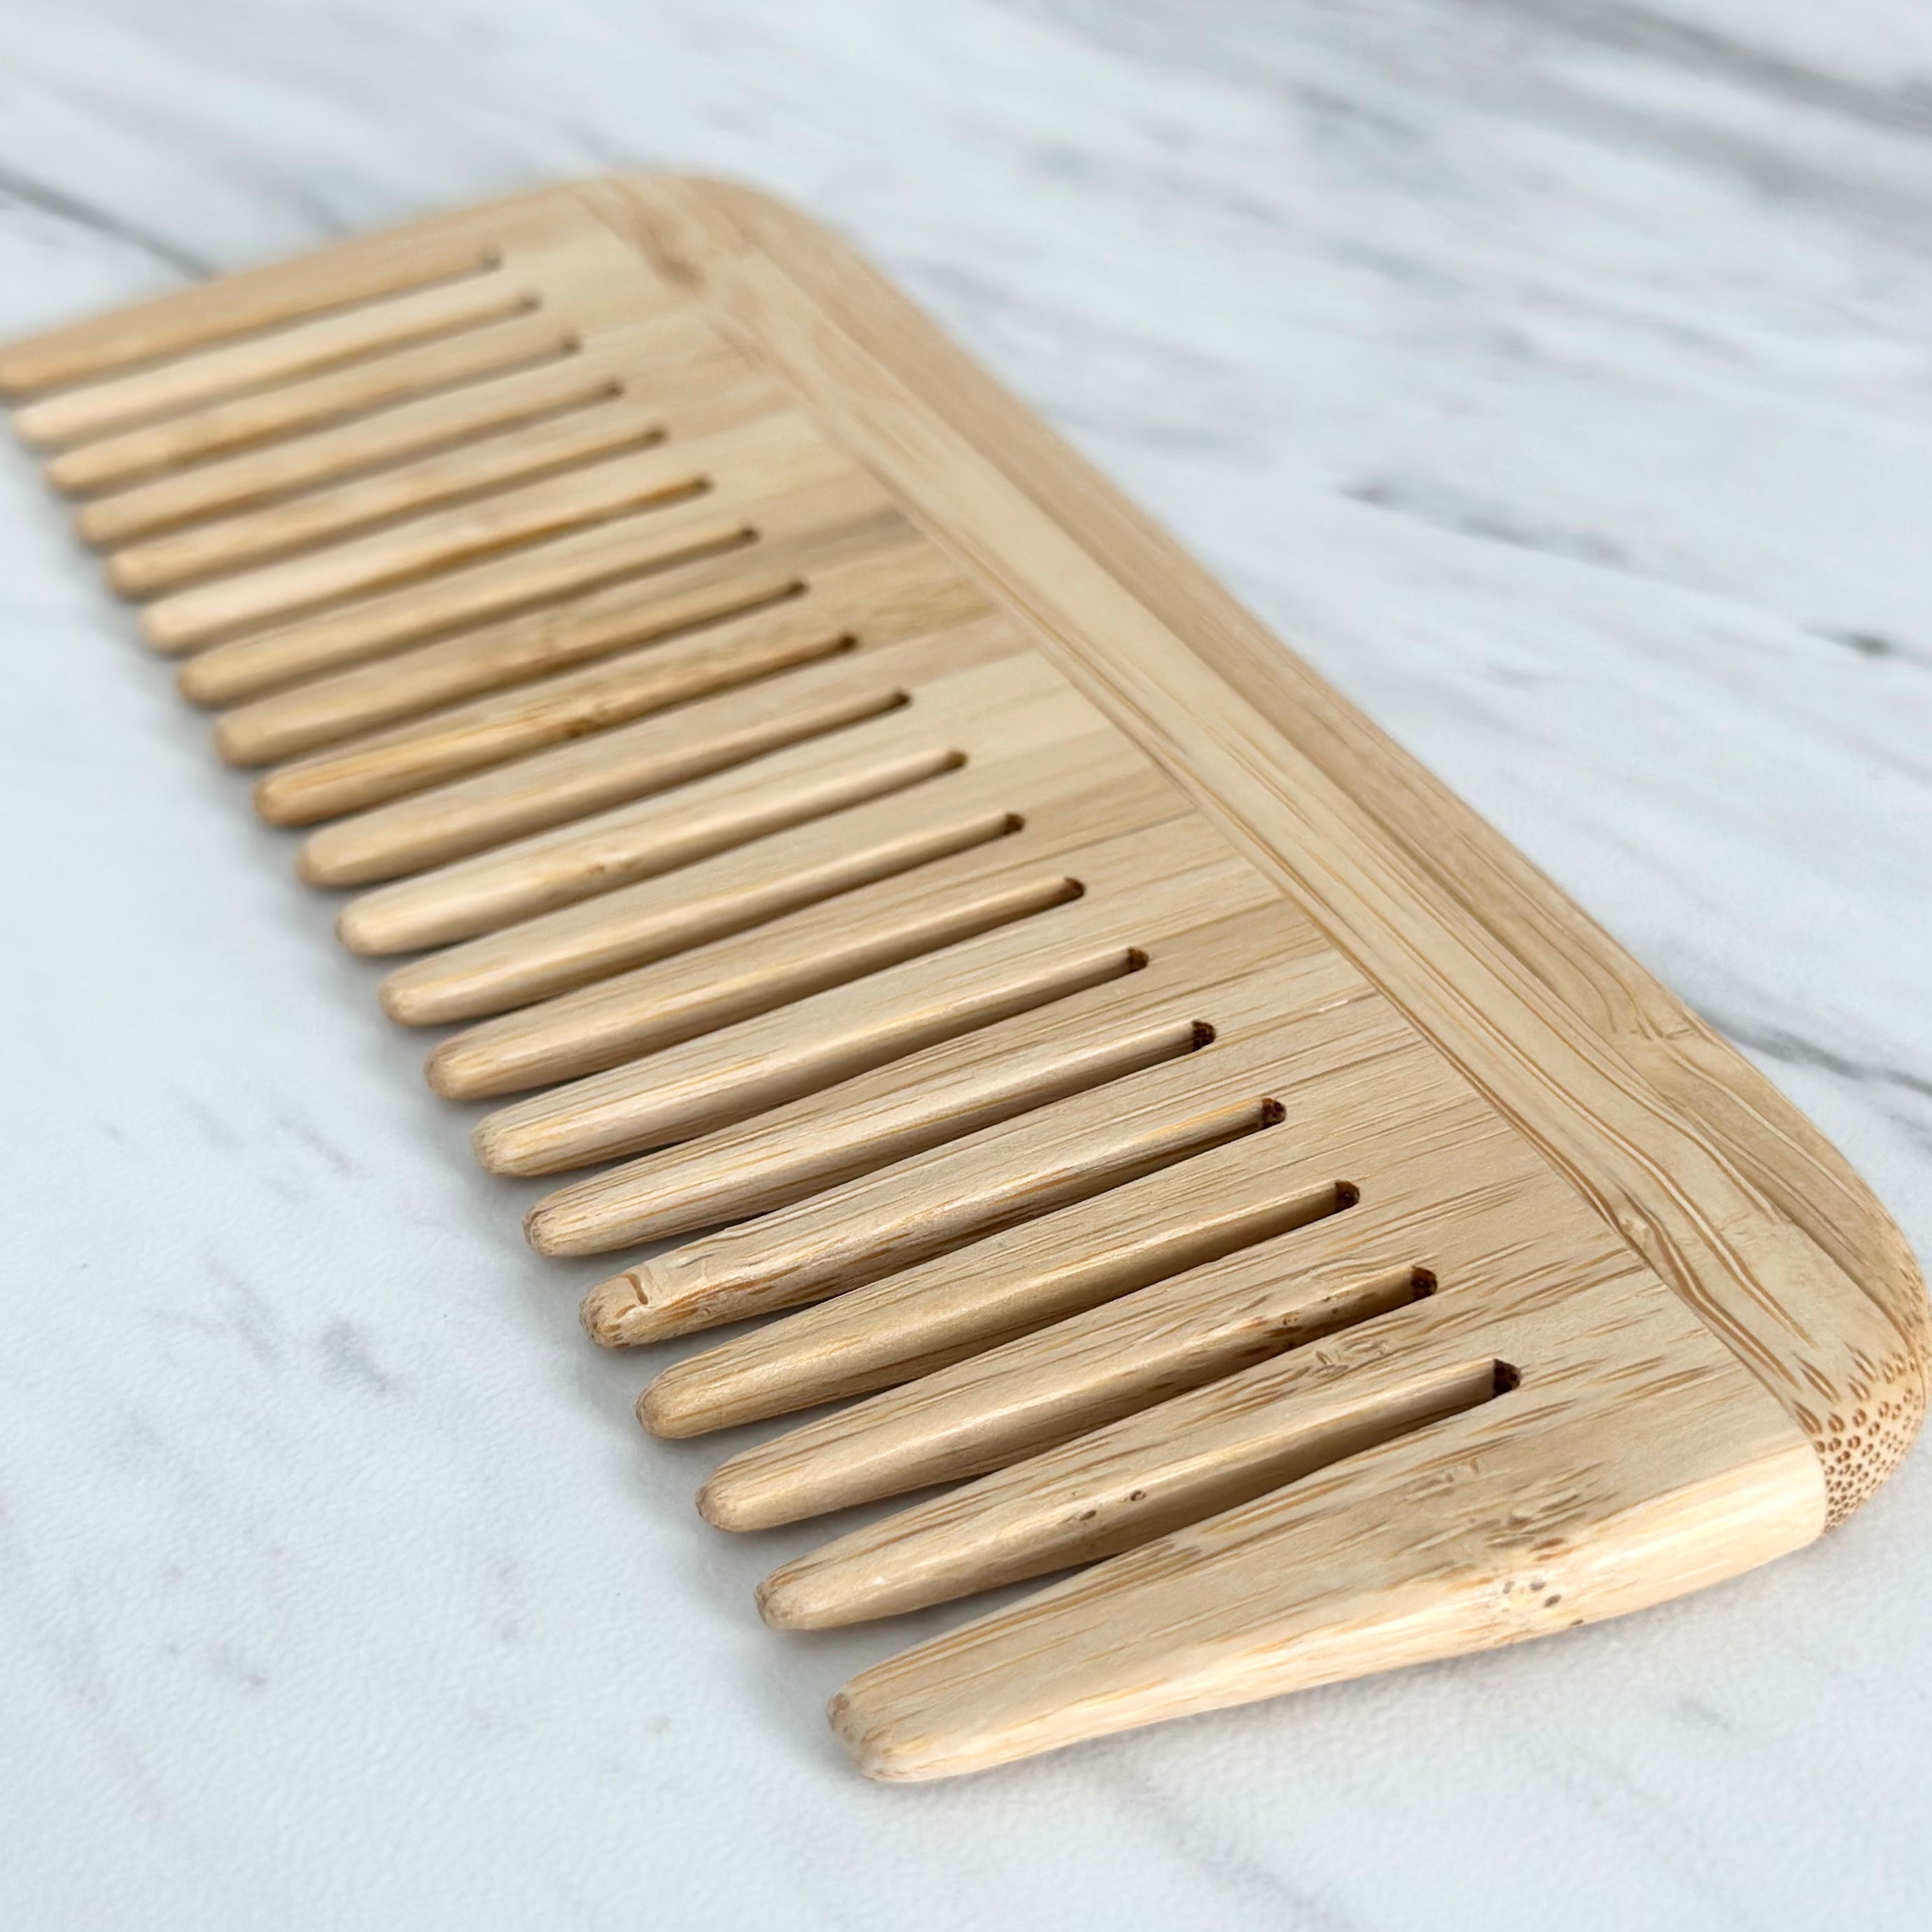 Bamboo comb